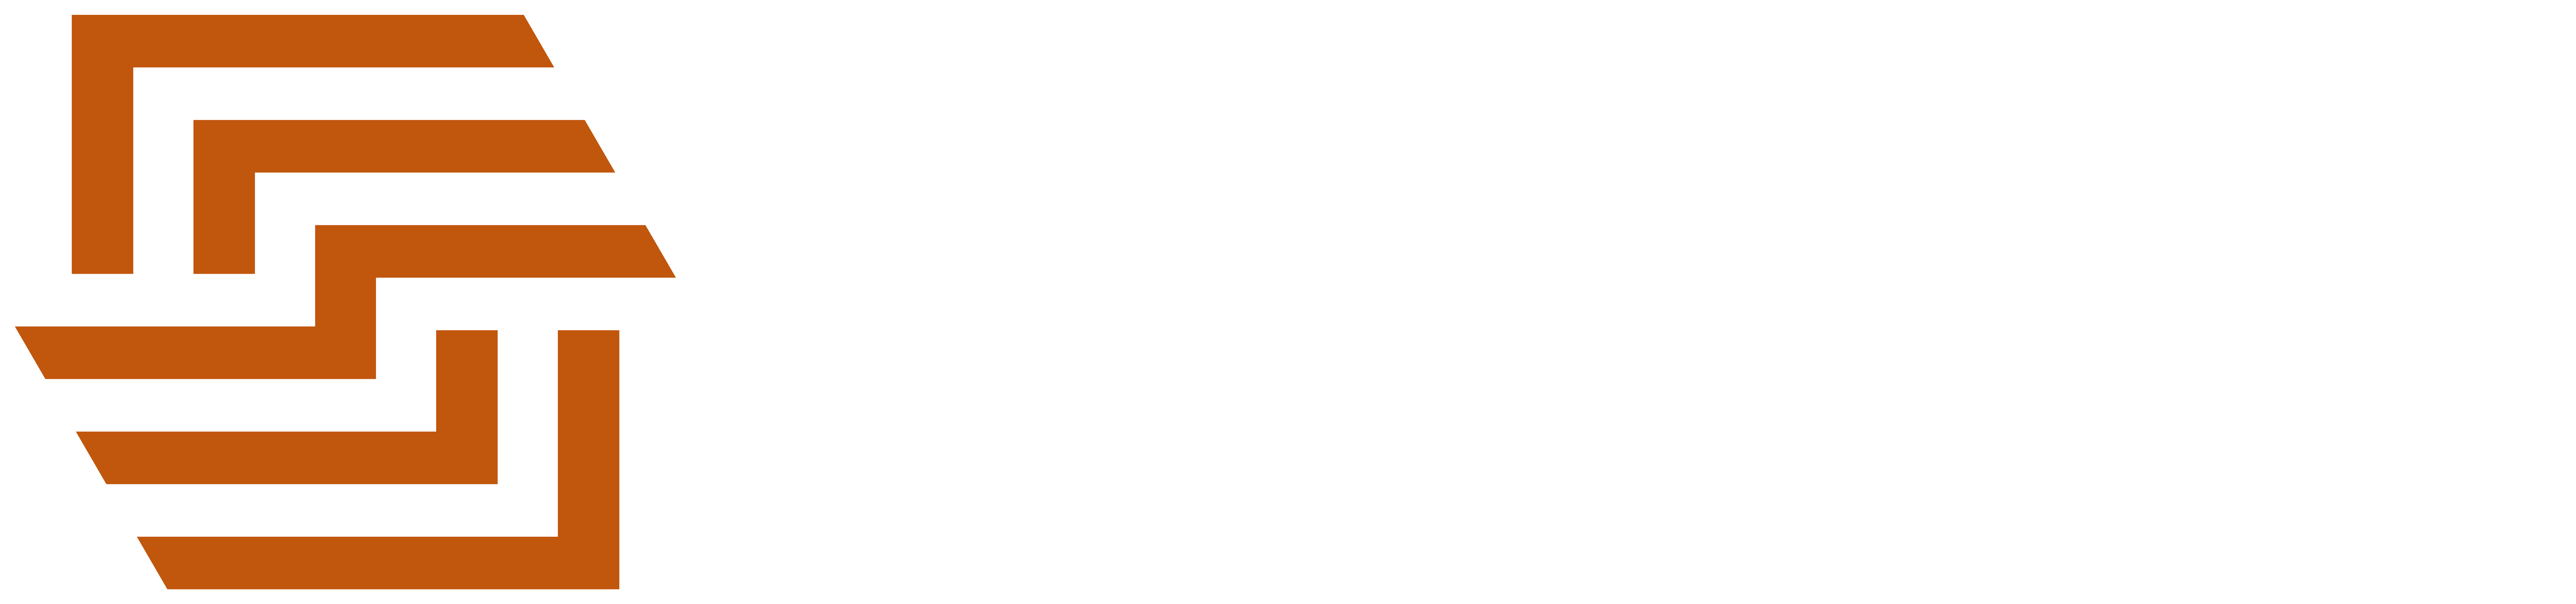 rbb_logo_icon_horizontal_negative